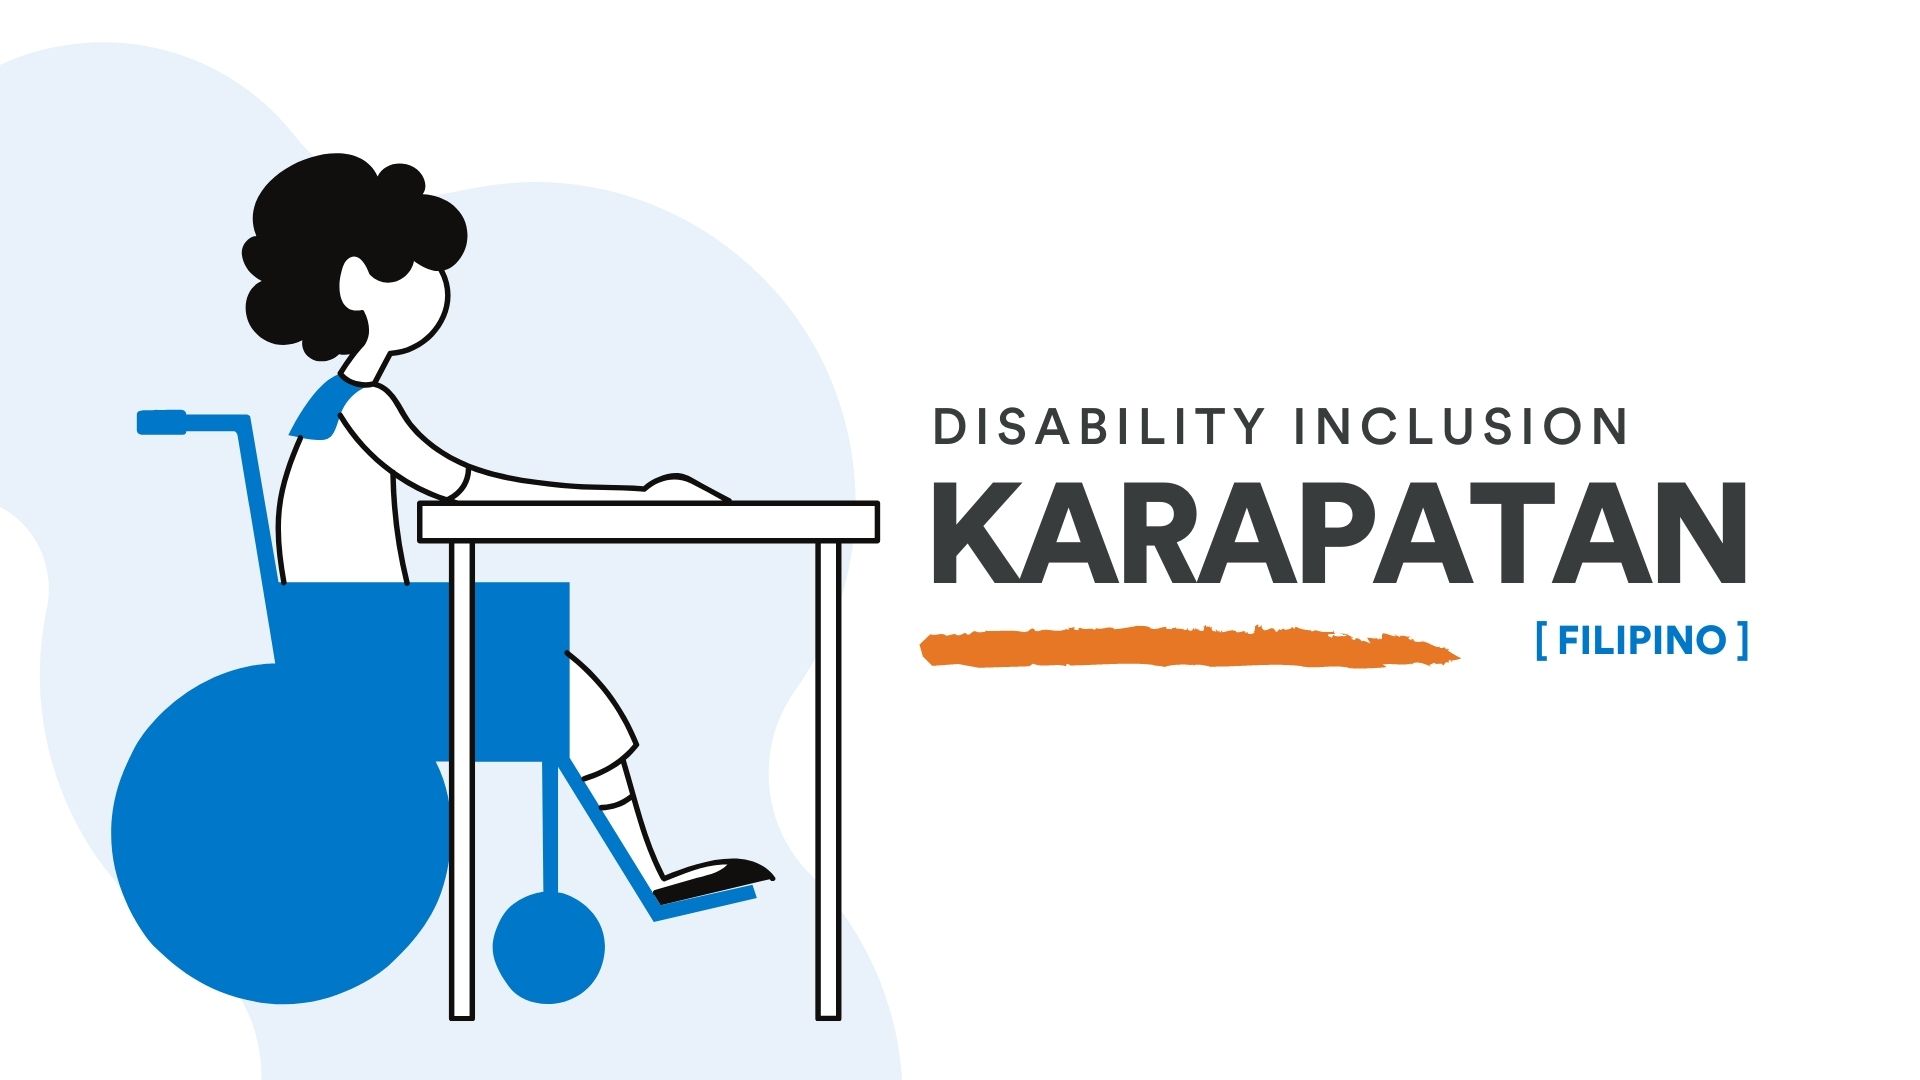 Karapatan: Disability Inclusion [Filipino]